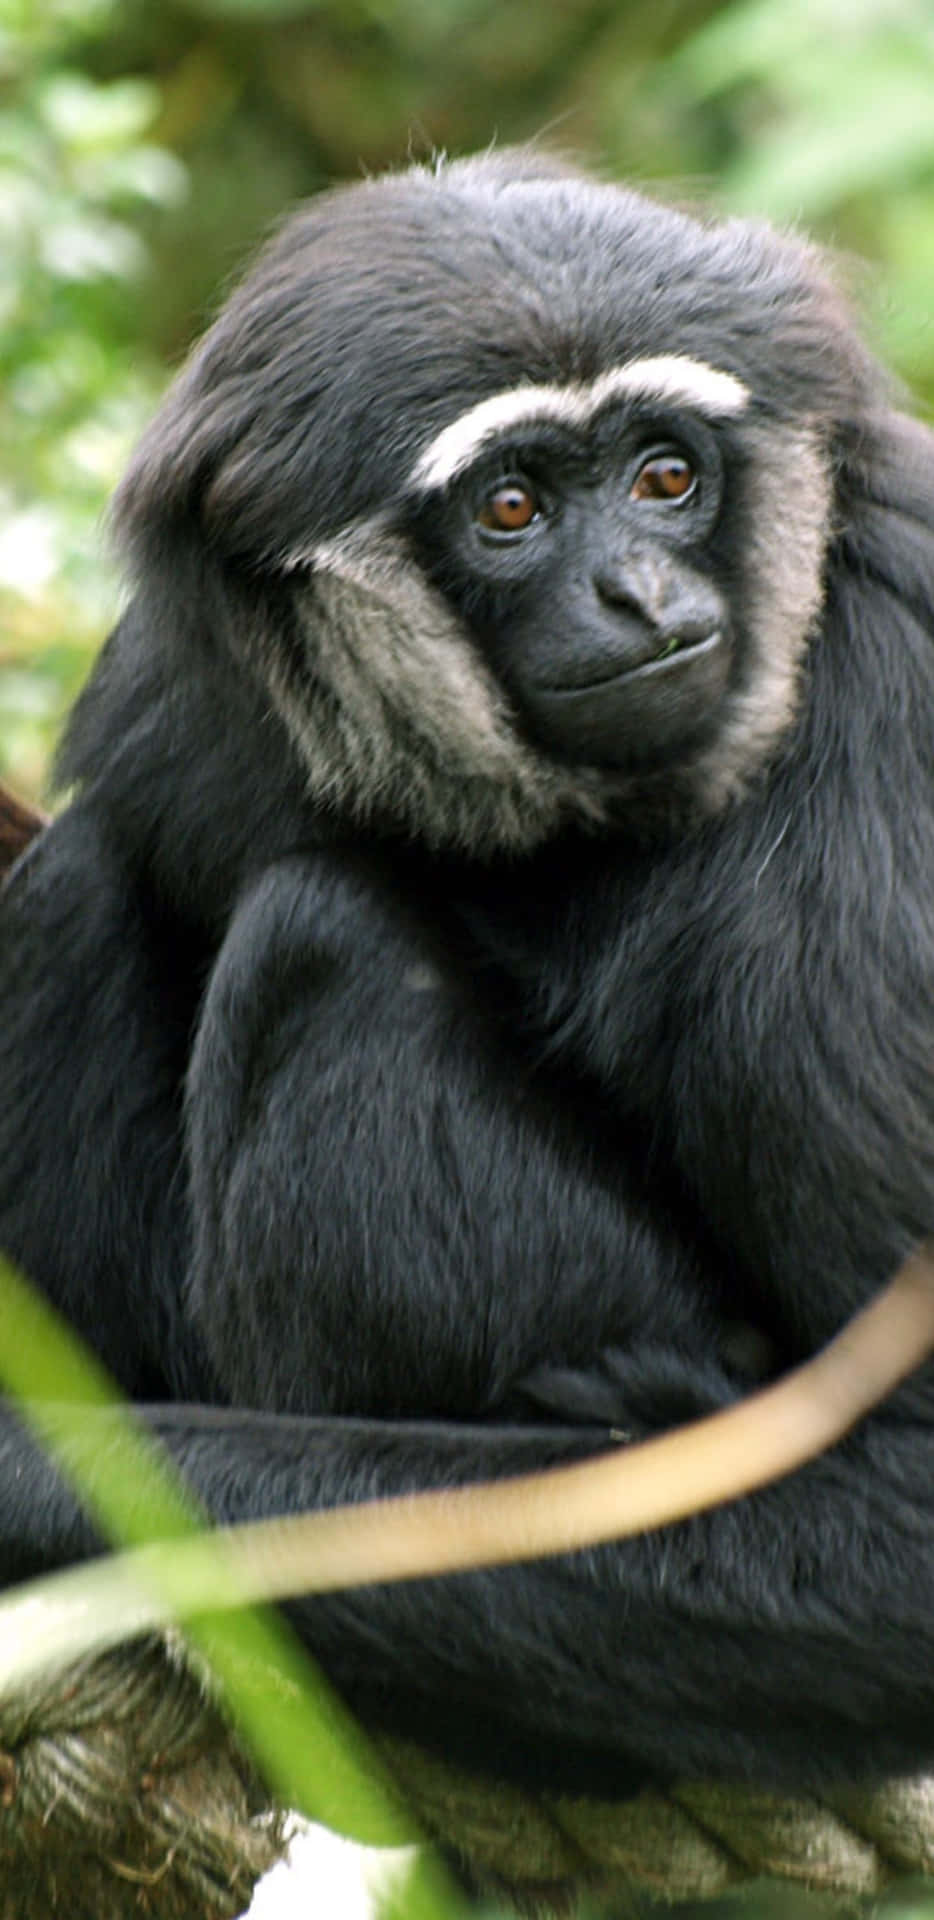 A Black Monkey Sitting On A Branch